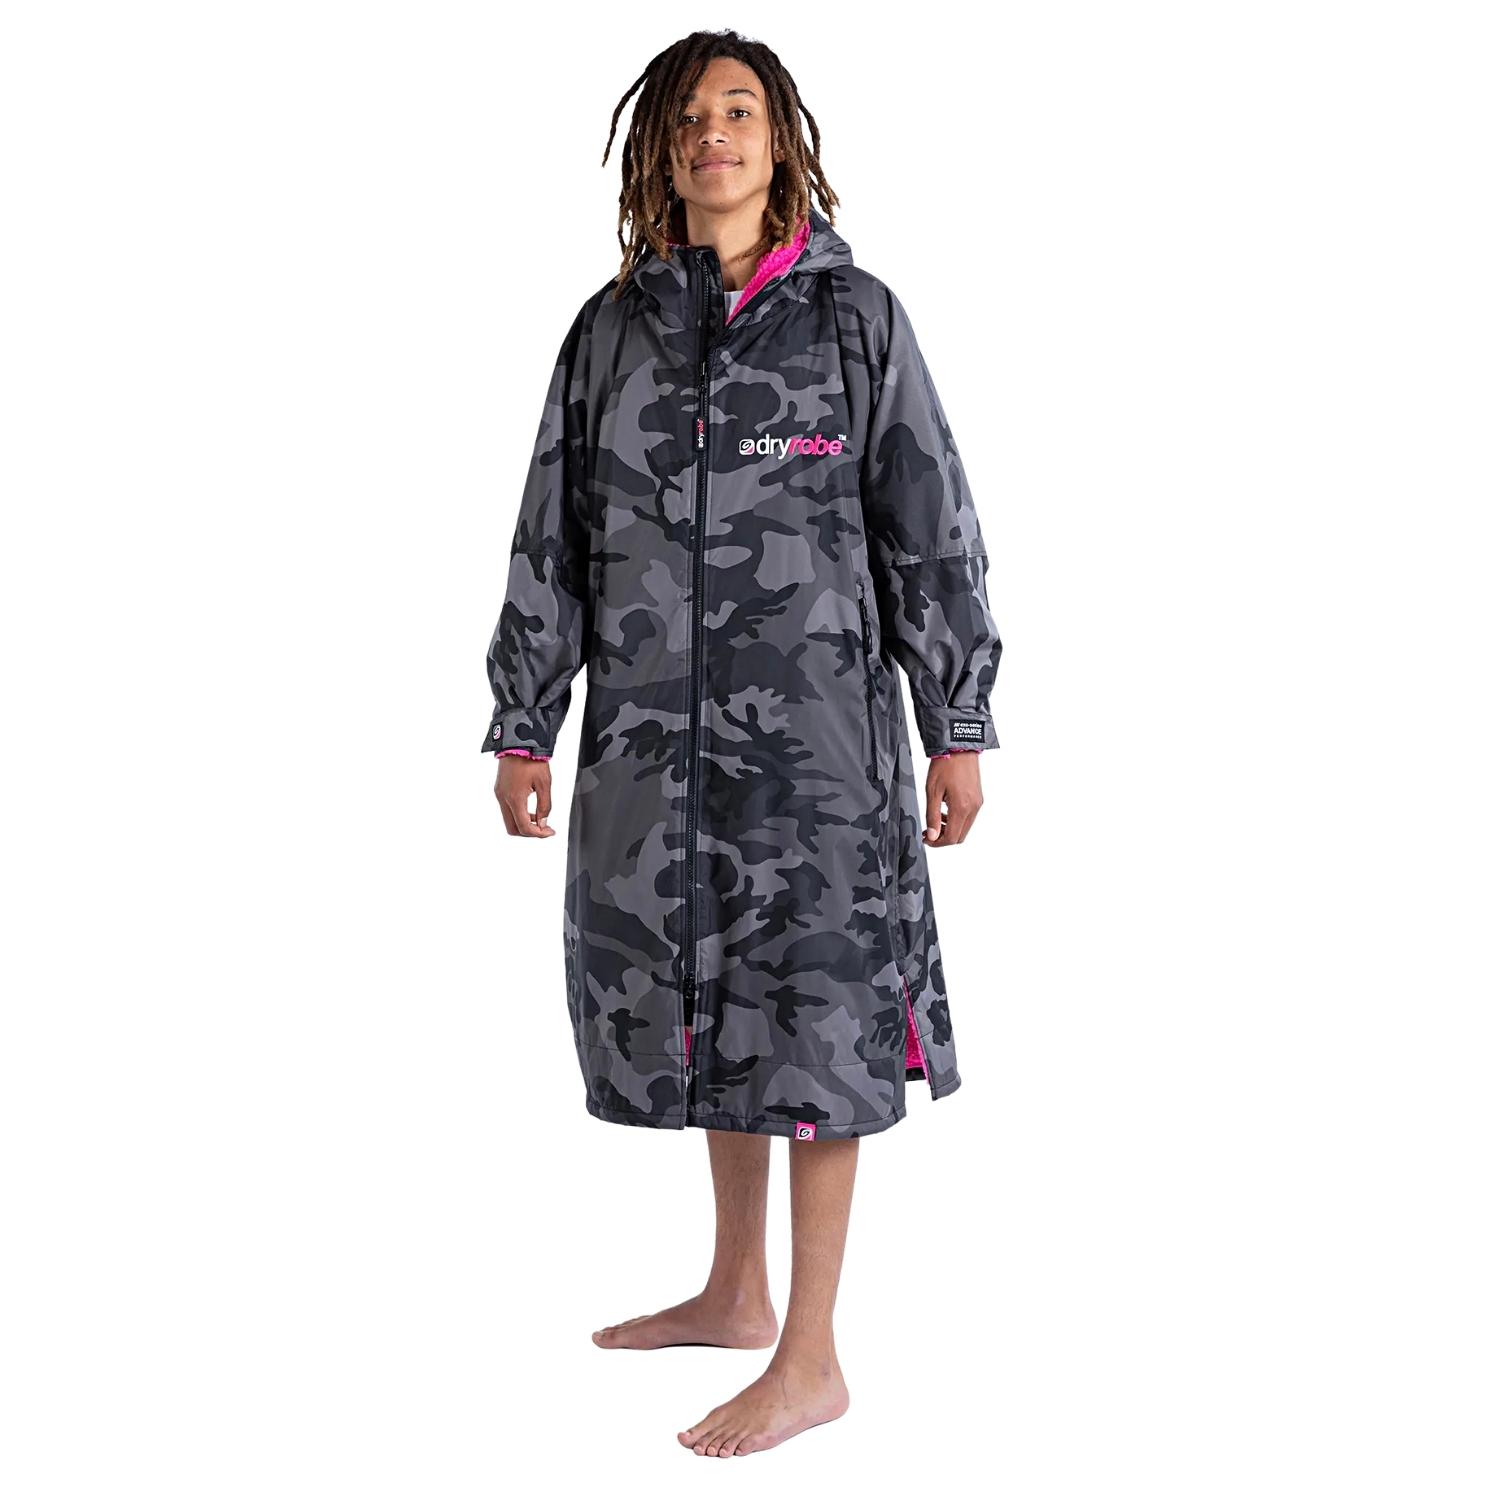 Dryrobe Advance Long Sleeve Drying & Changing Robe - Black Camo/Pink - Changing Robe Poncho Towel by Dryrobe